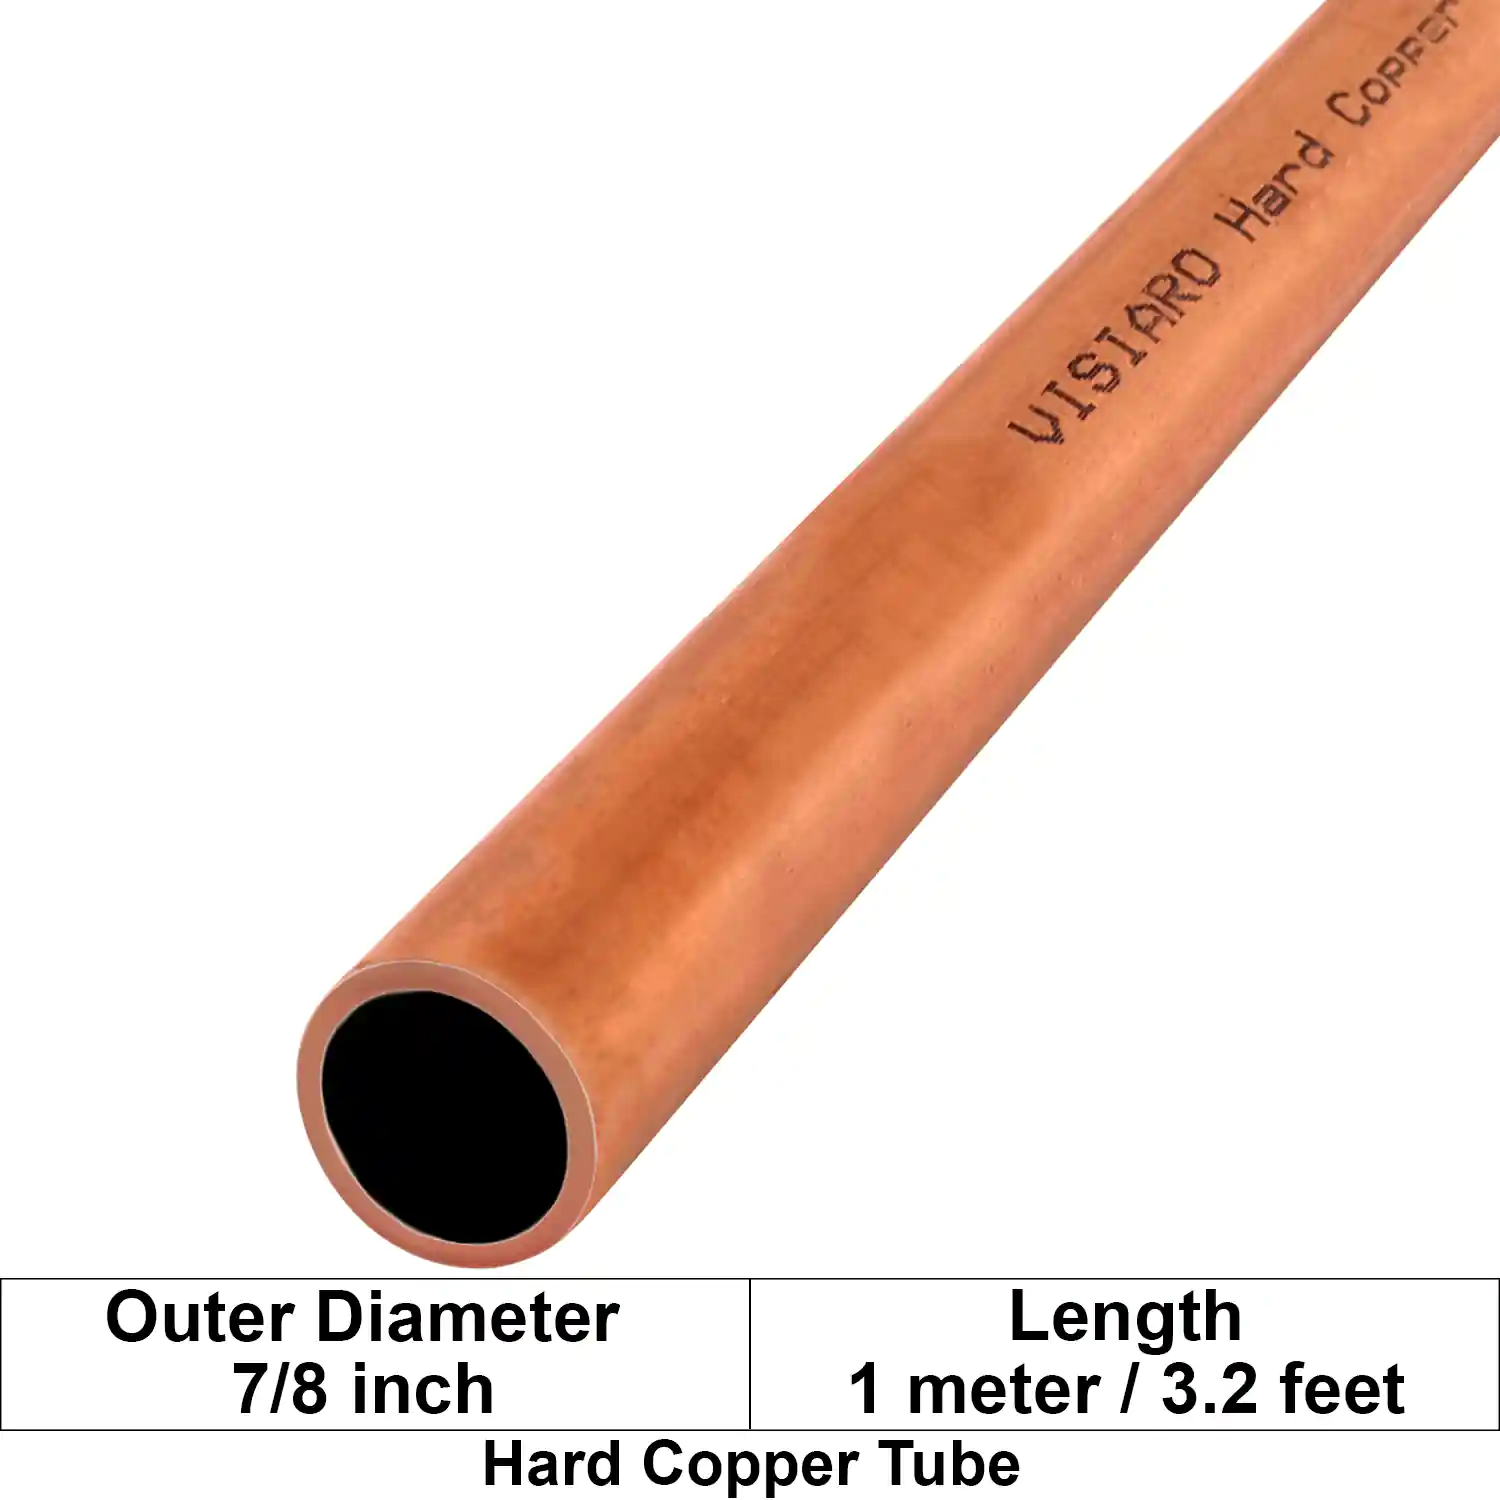 Visiaro Hard Copper Tube 1mtr long Outer Diameter - 7/8 inch